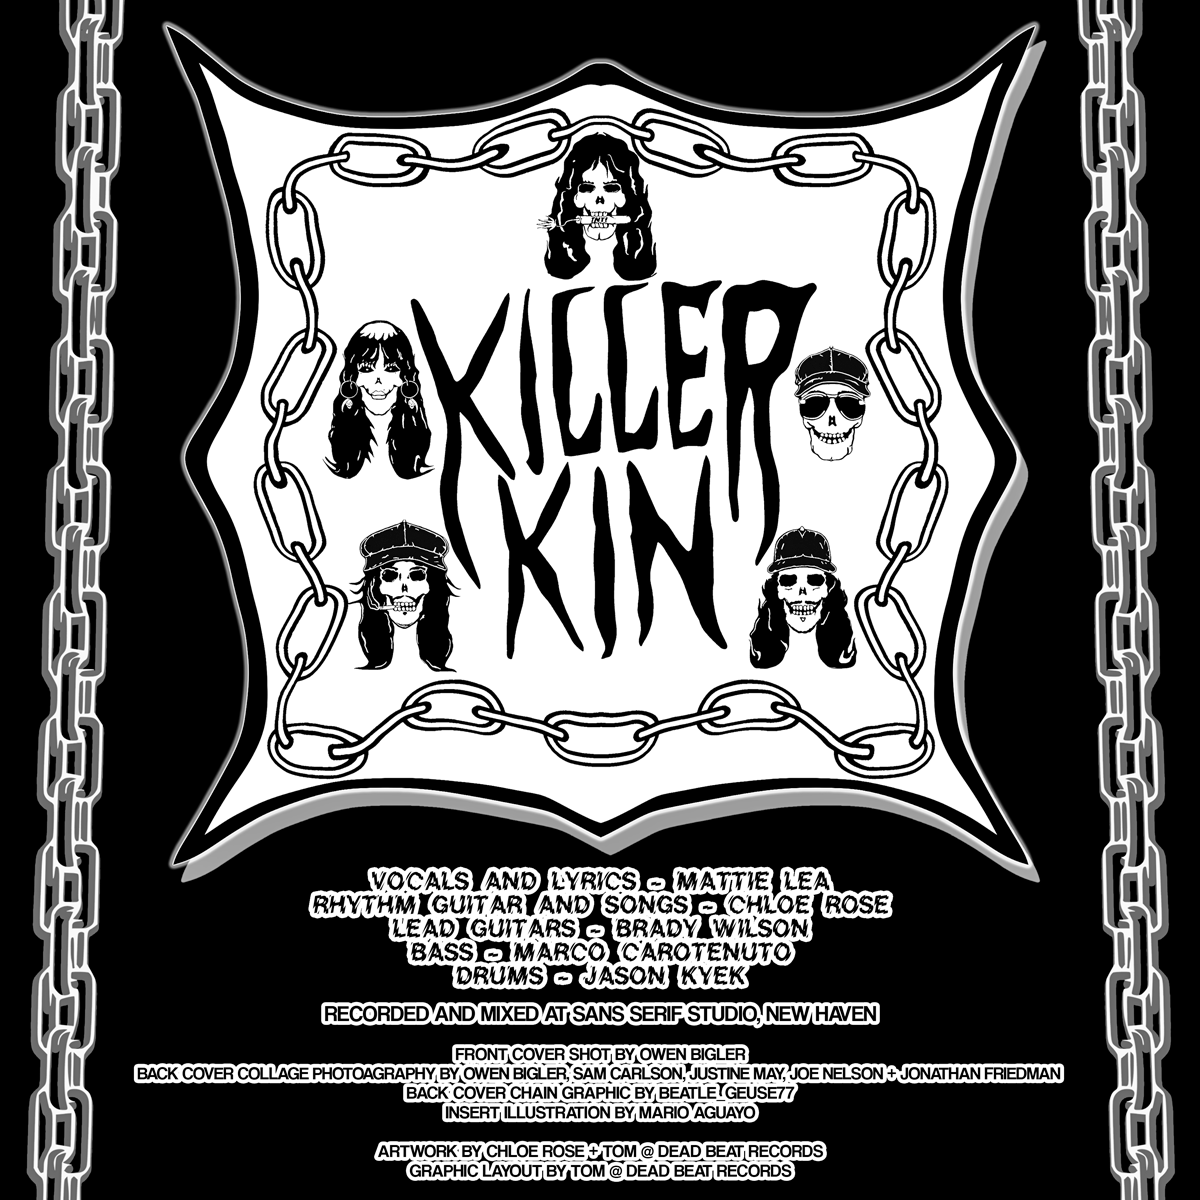 Killer Kin- S/T LP ~SPECIAL EDITION: TRANSPARENT YELLOW VINYL W/ HEAVY SPLATTER + KILLER KIN BUTTON LTD TO 100!